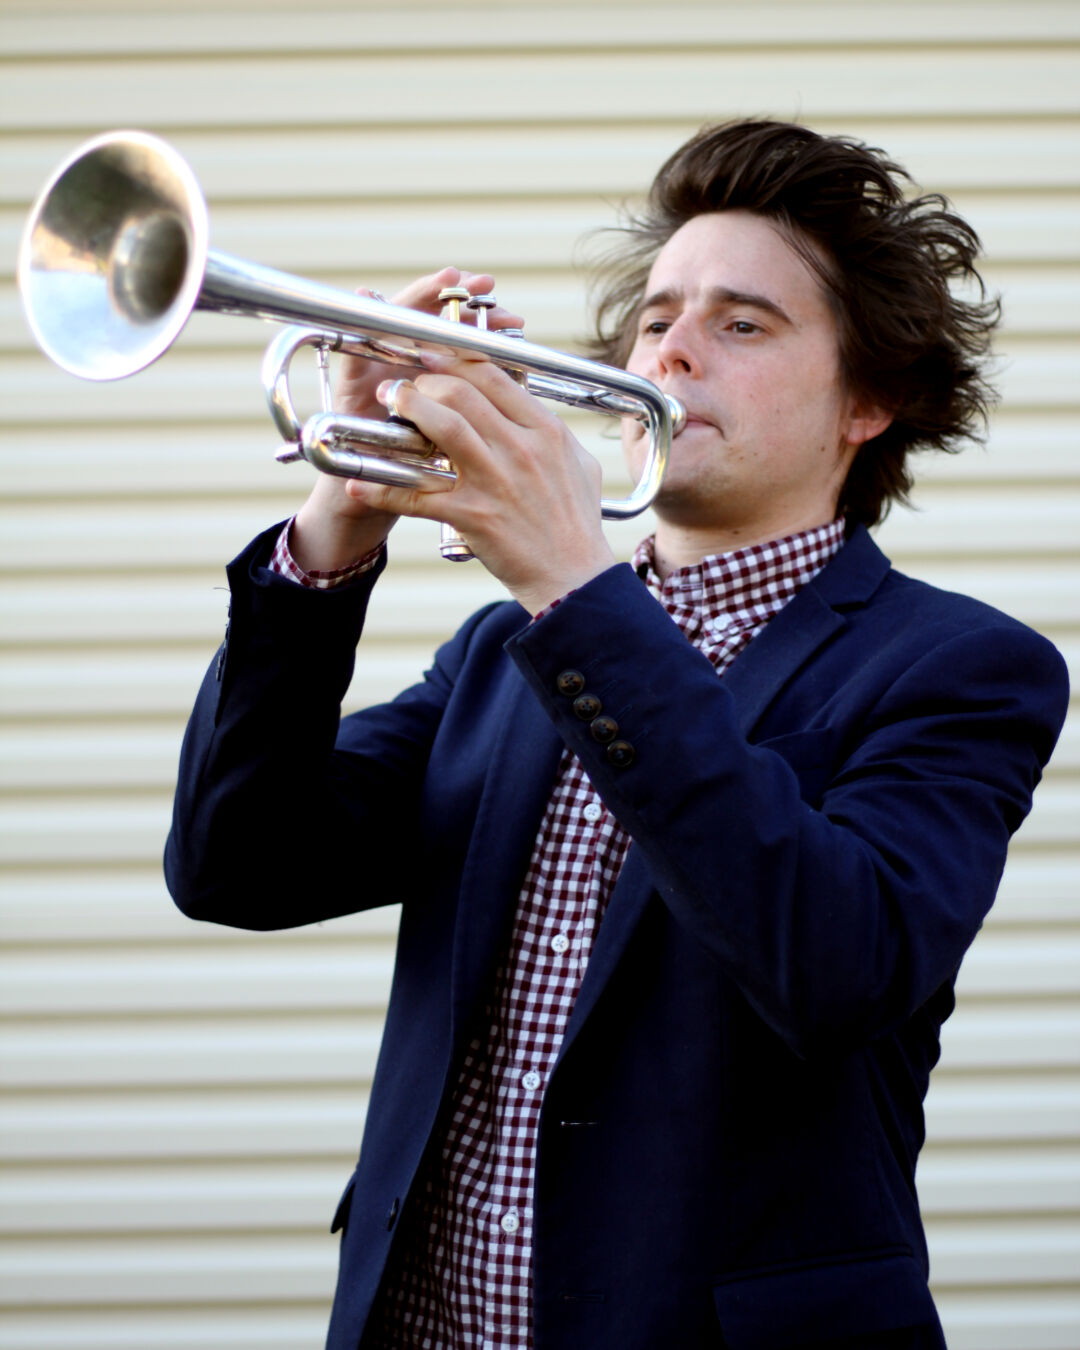 Sam Nester playing trumpet.